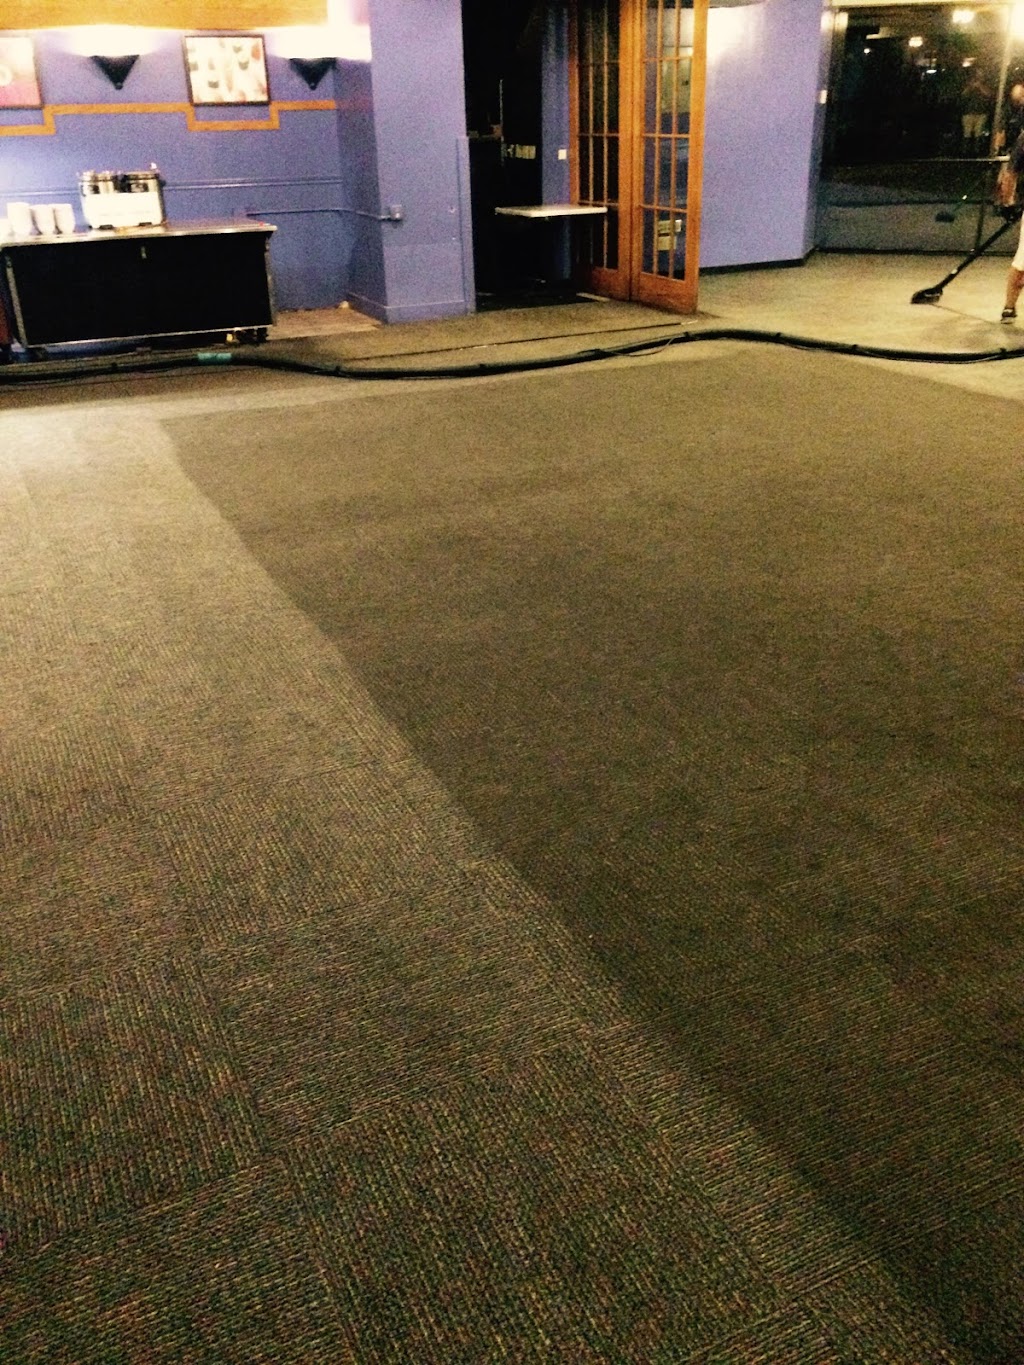 Clean Carpet Rx - Carpet Cleaning Honolulu | 6960 Niumalu Loop, Honolulu, HI 96825, USA | Phone: (808) 388-8778